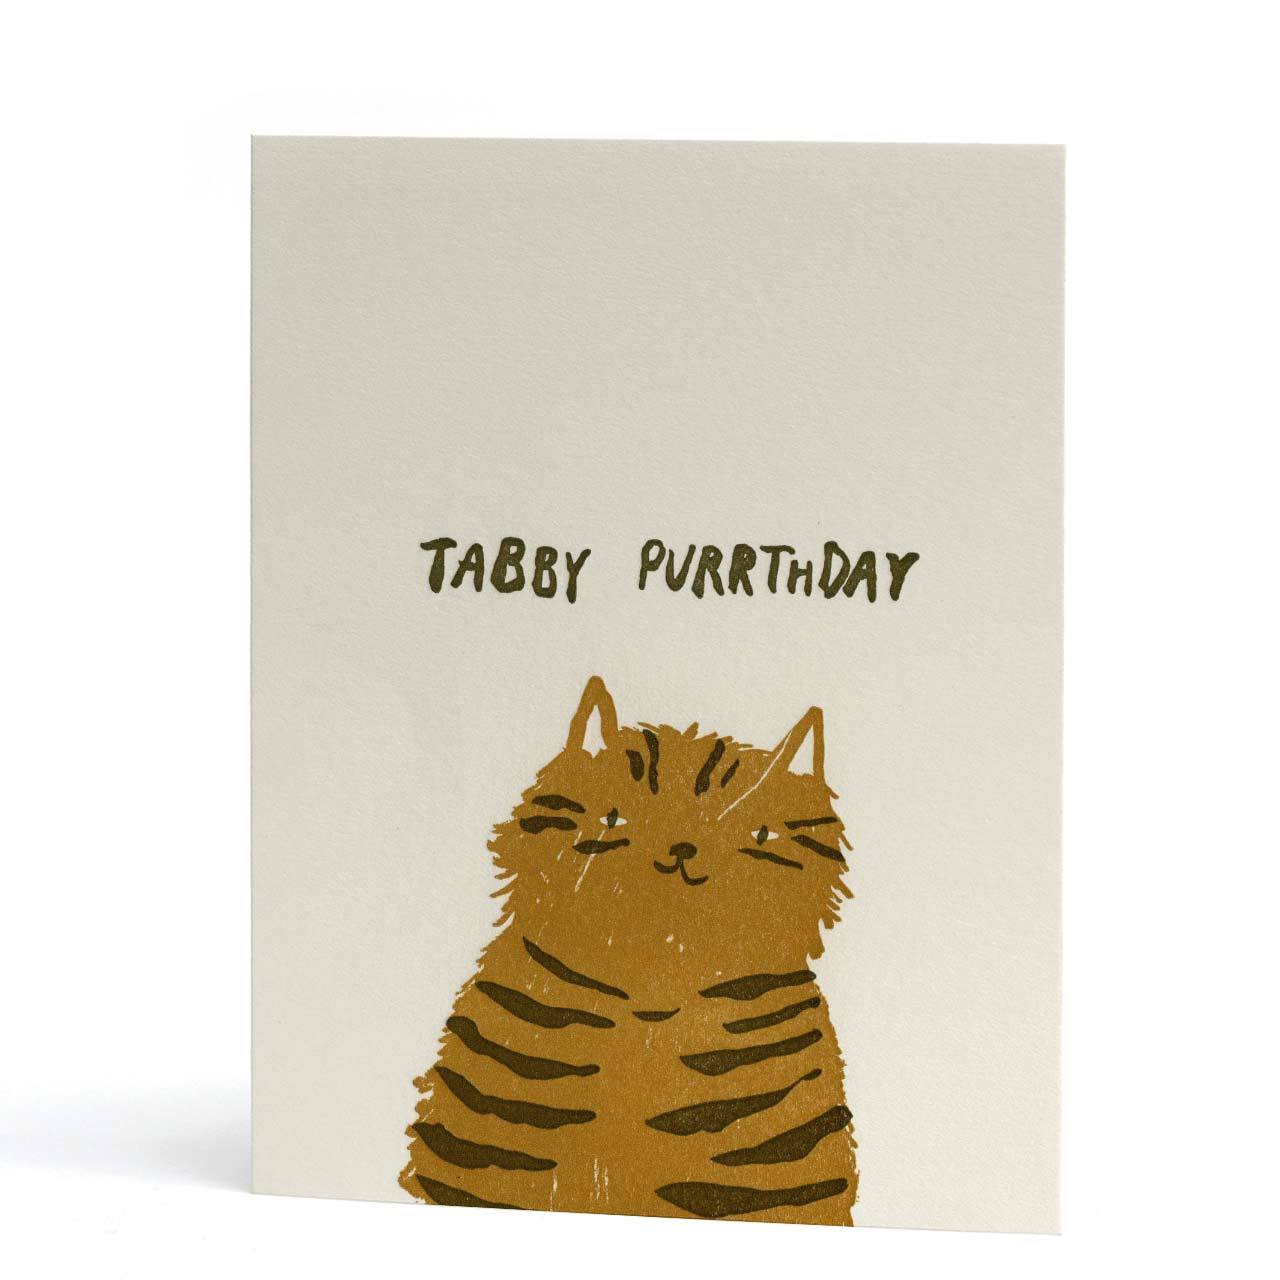 Tabby Purrthday Letterpress Greeting Card